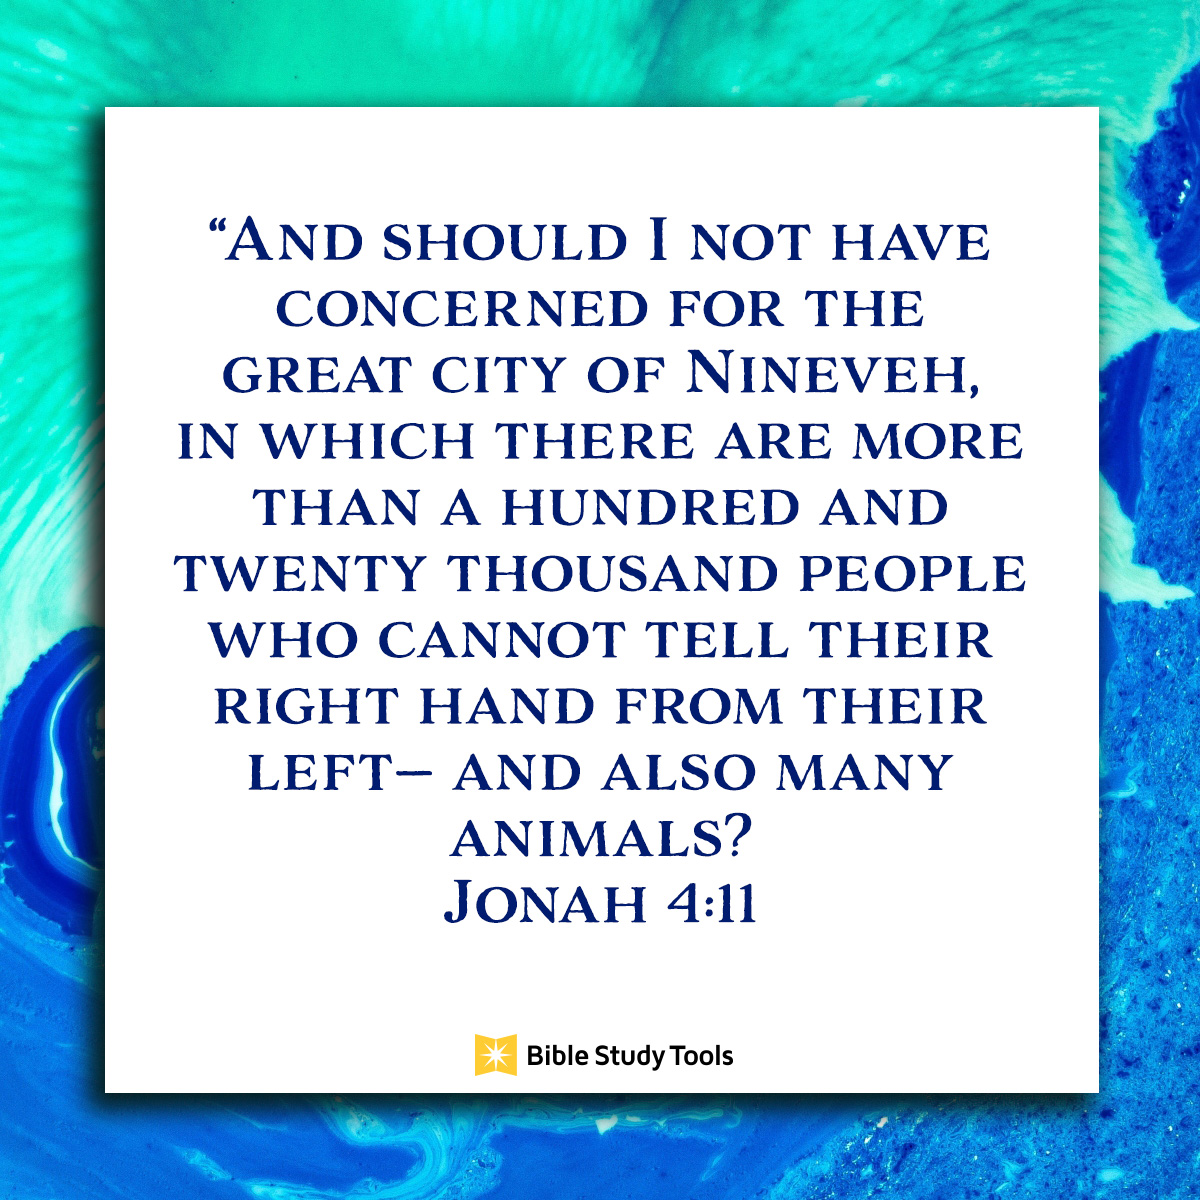 Jonah 4:11, inspirational image